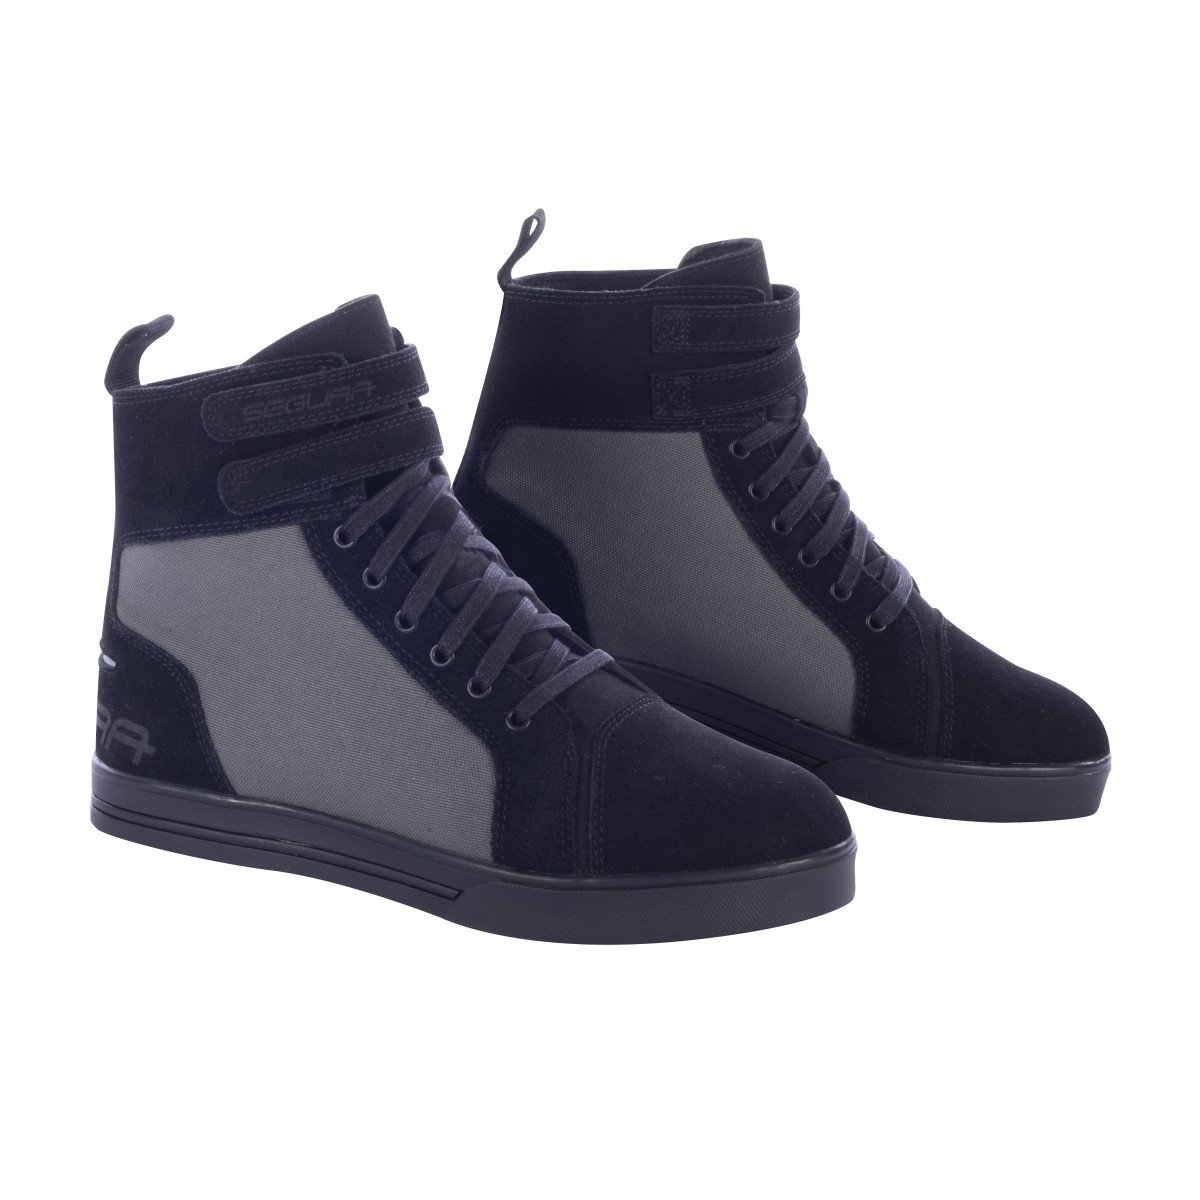 Image of Segura Sneakers Contact Black Grey Size 44 EN